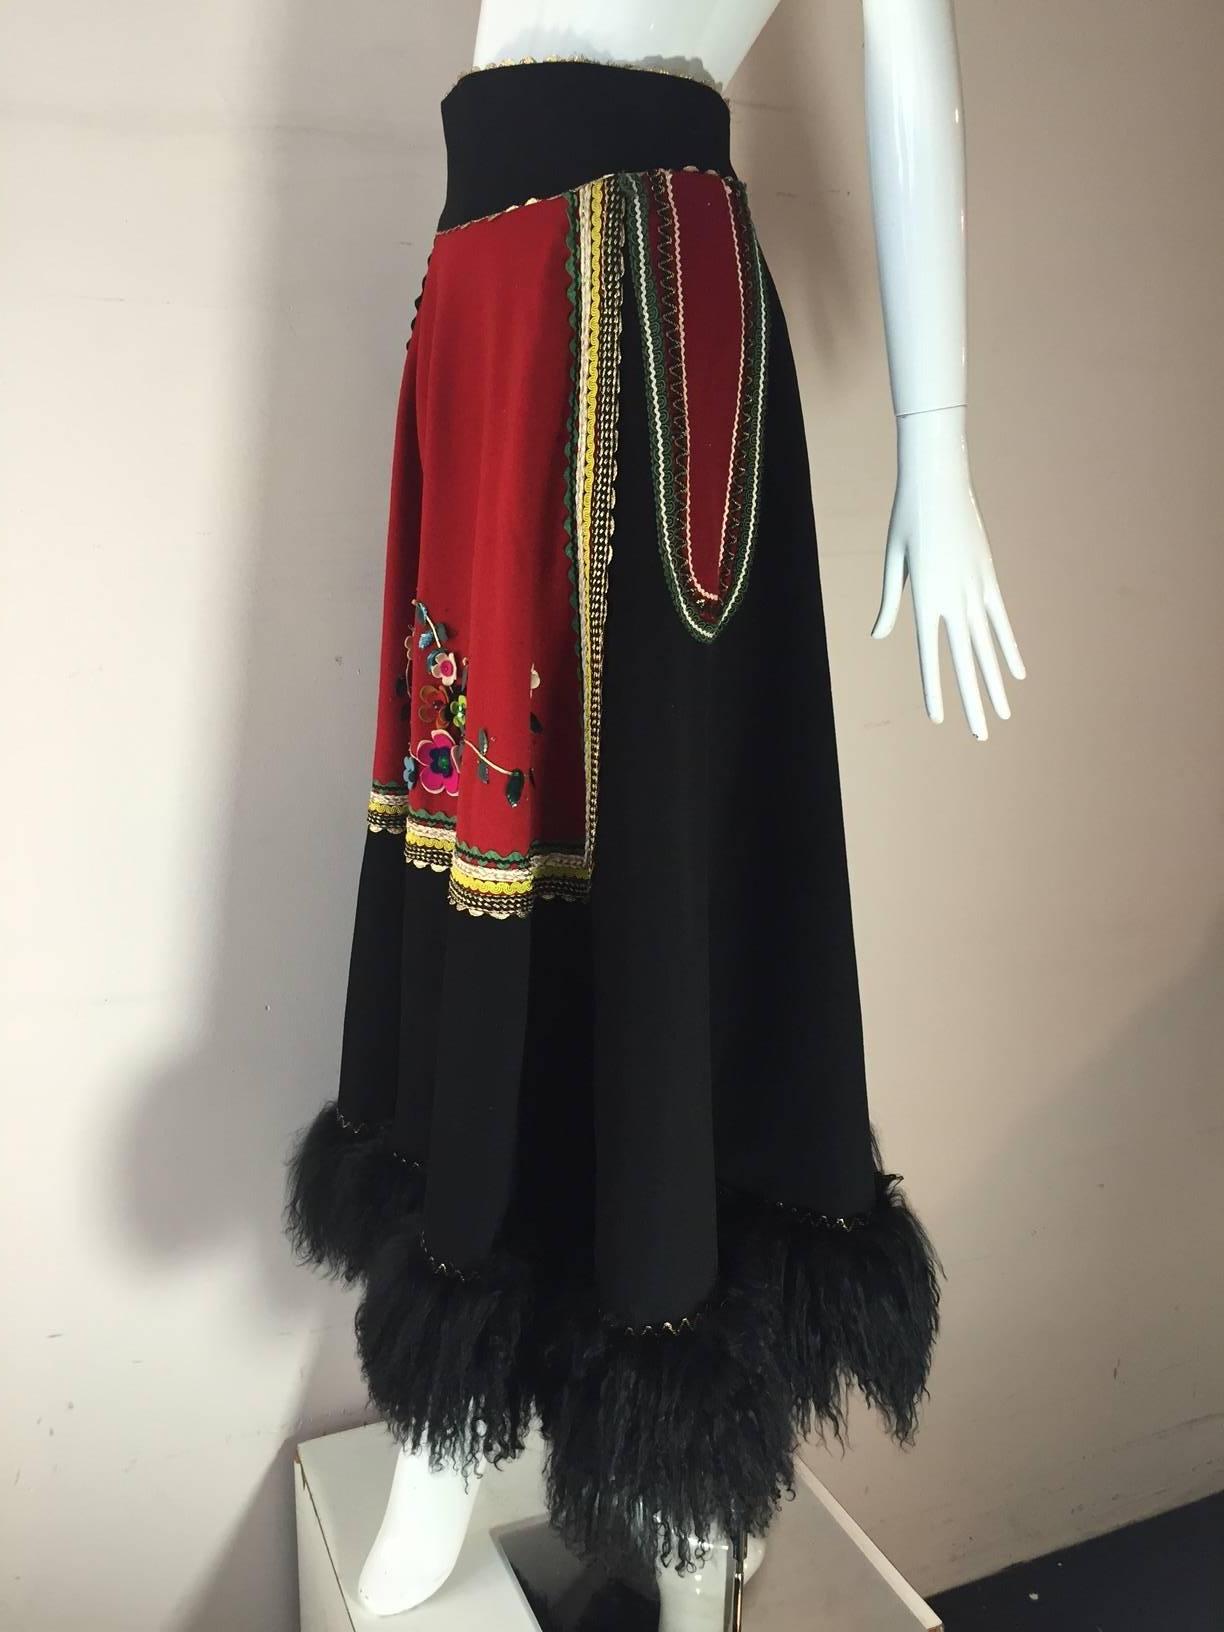 Women's 1940s Wool Felt Folkloric Skirt w/ RicRac and Floral Applique Trim - Fur Hem